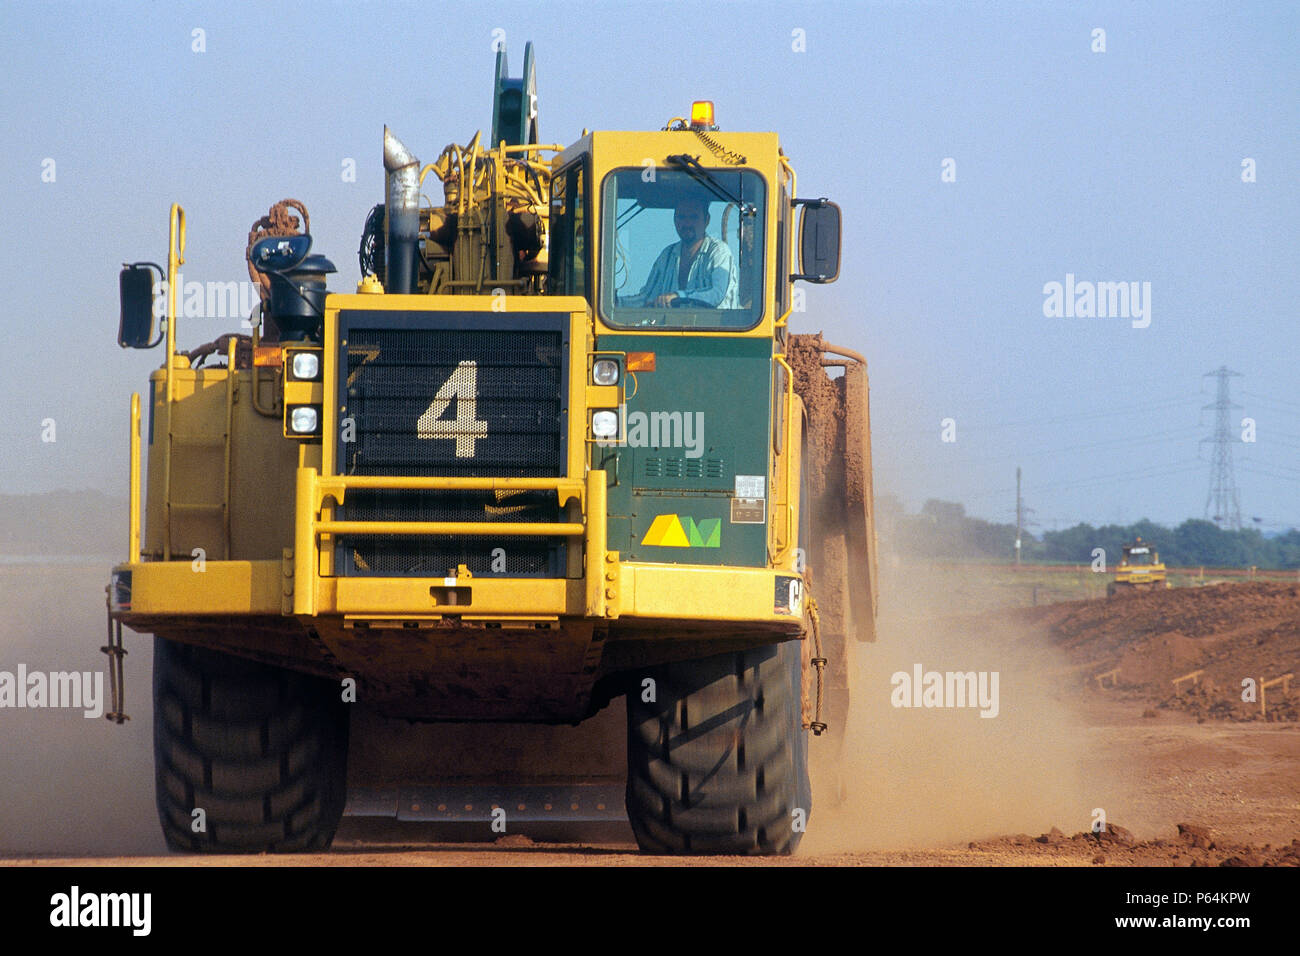 AMPL Caterpillar grader. M6 toll road construction, Birmingham, United Kingdom. Stock Photo